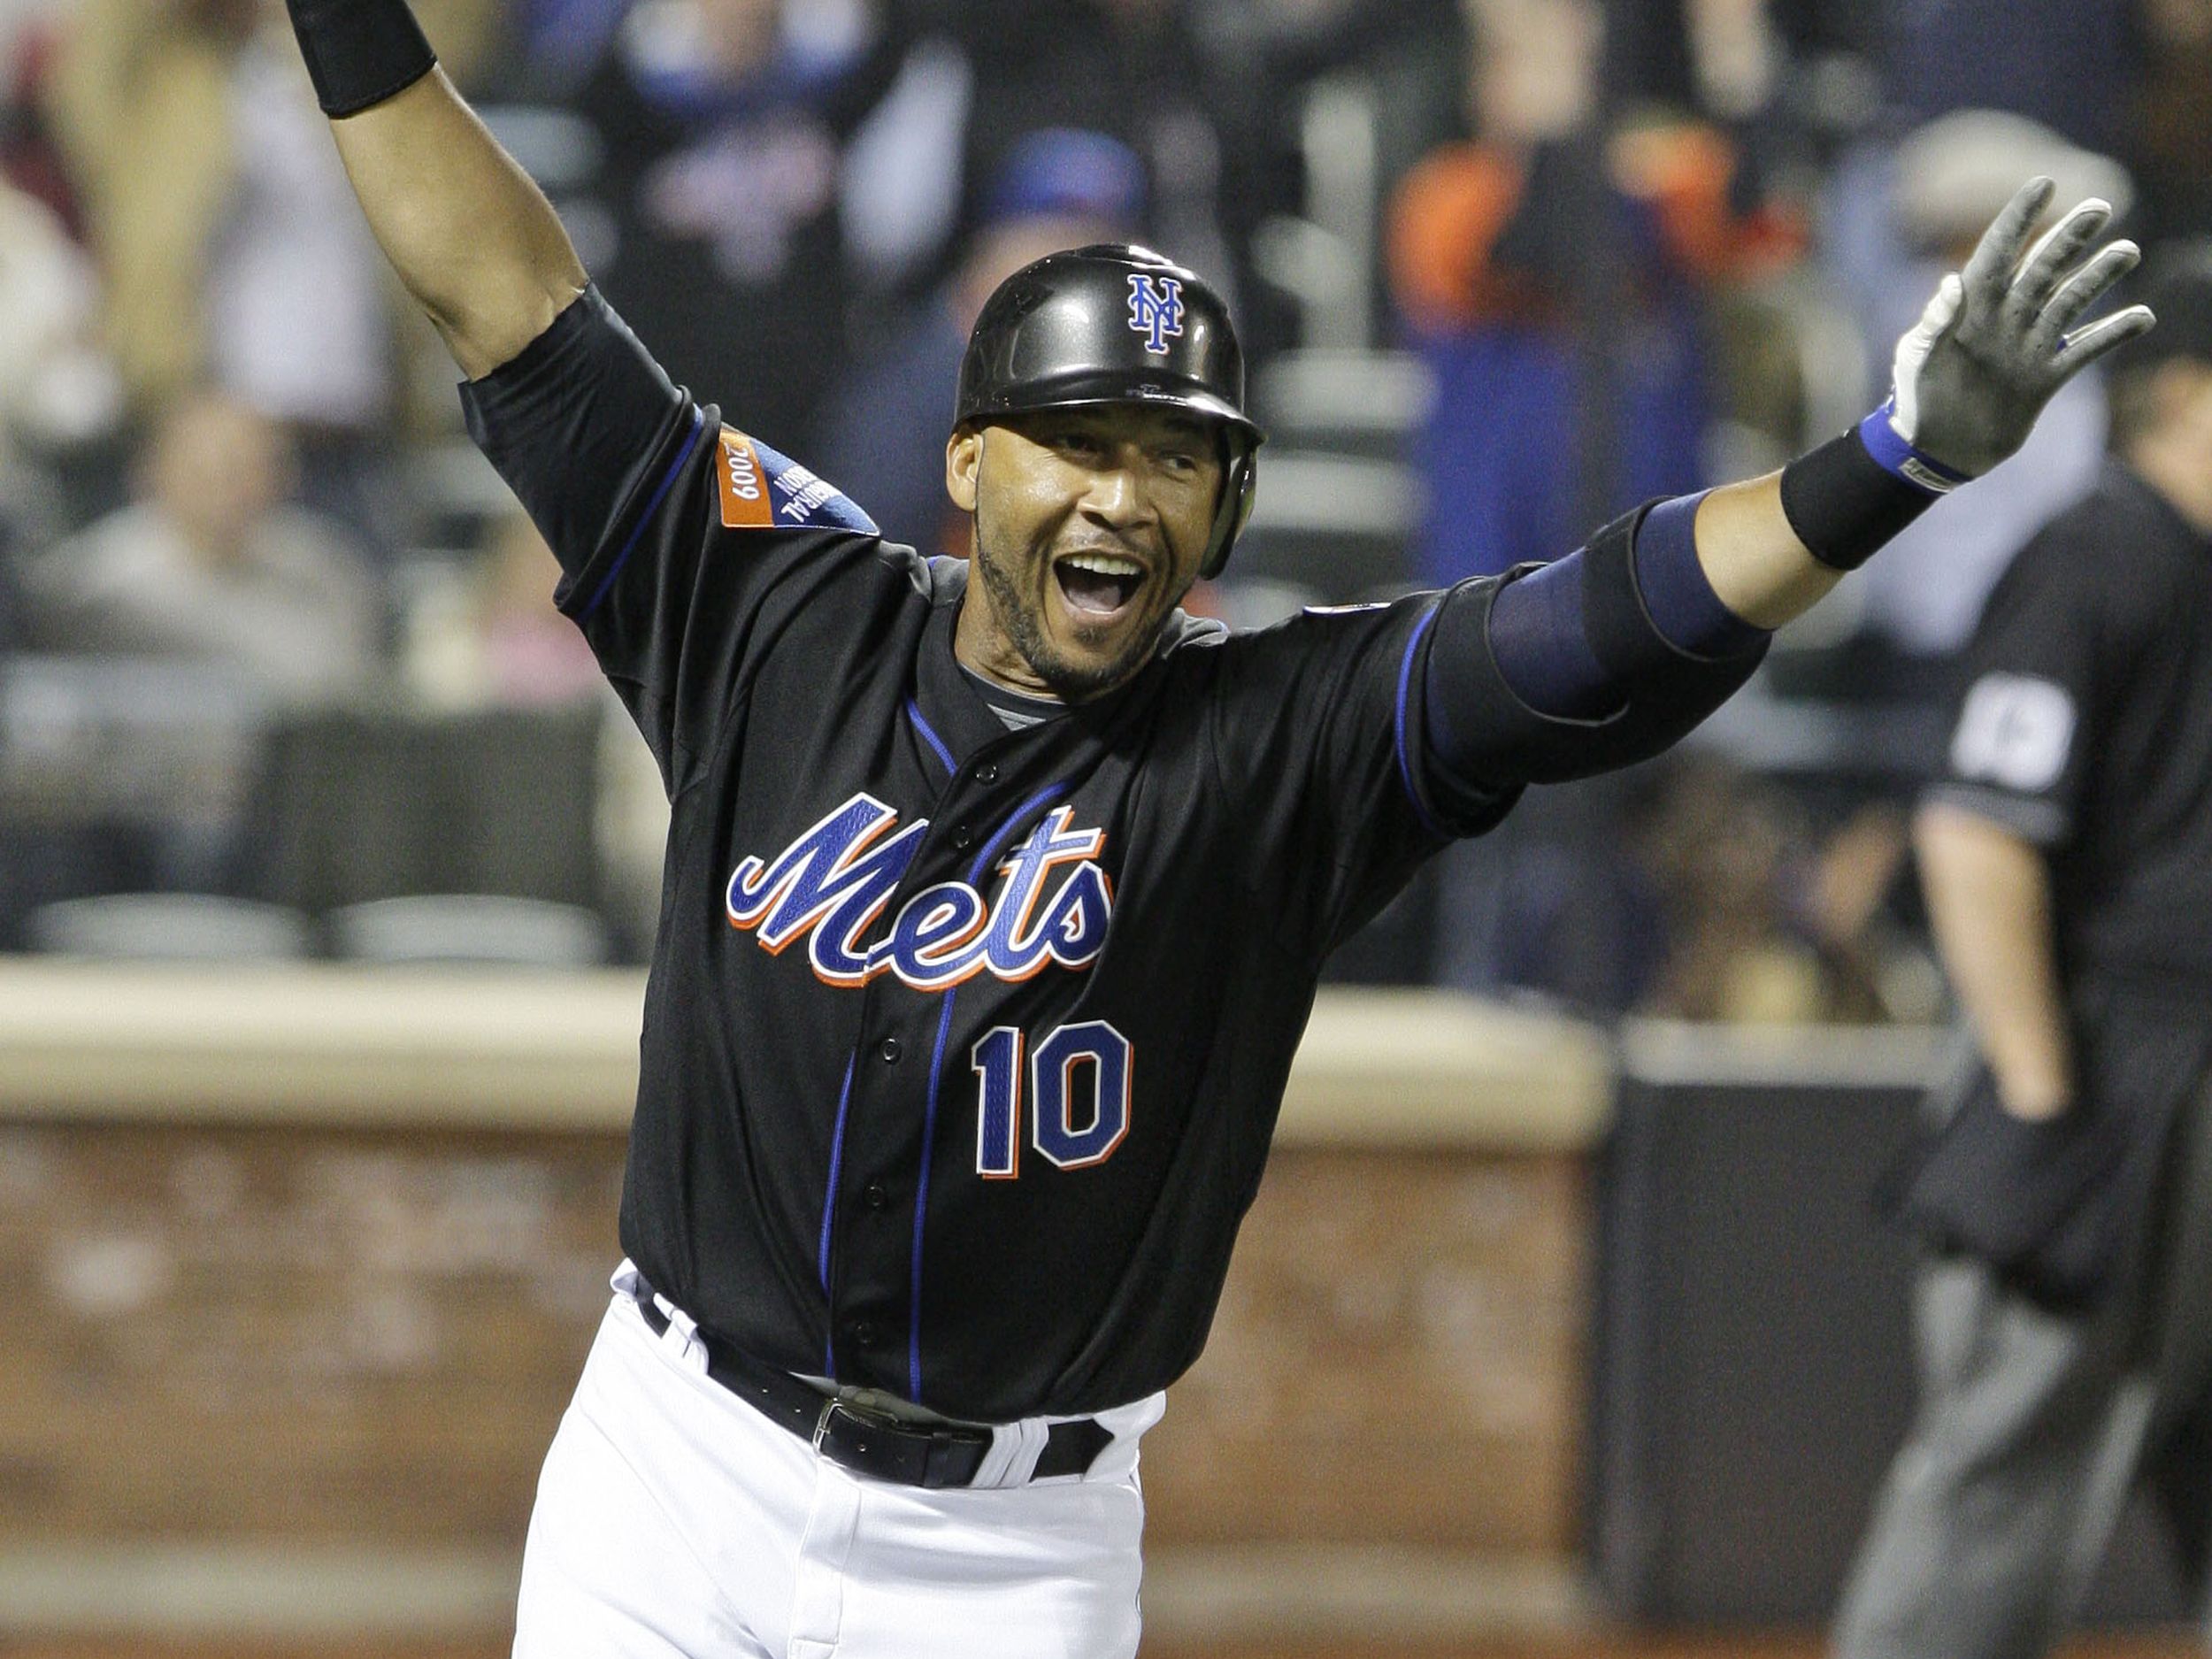 Mets Flashback: Gary Sheffield's 500th Home Run - Metsmerized Online